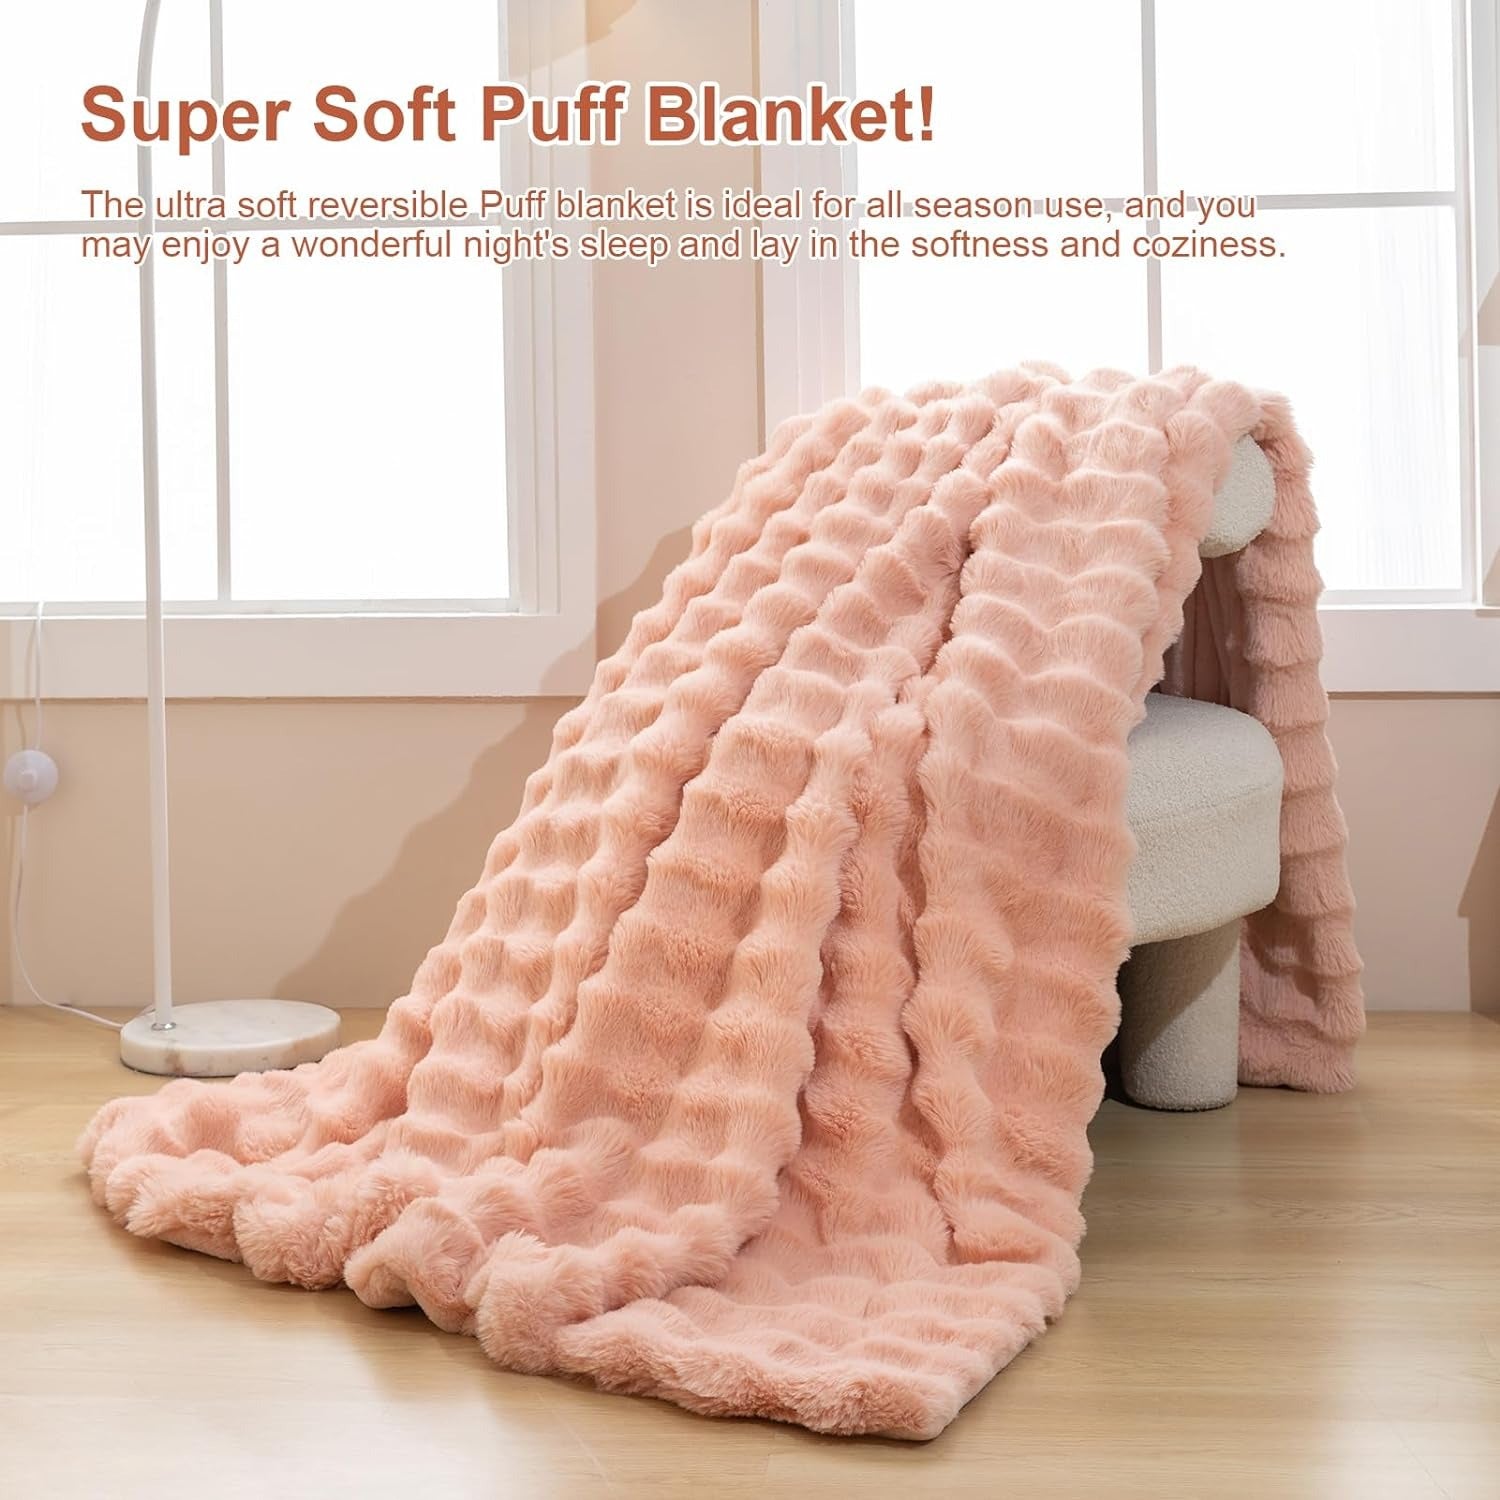 super soft puff blanket